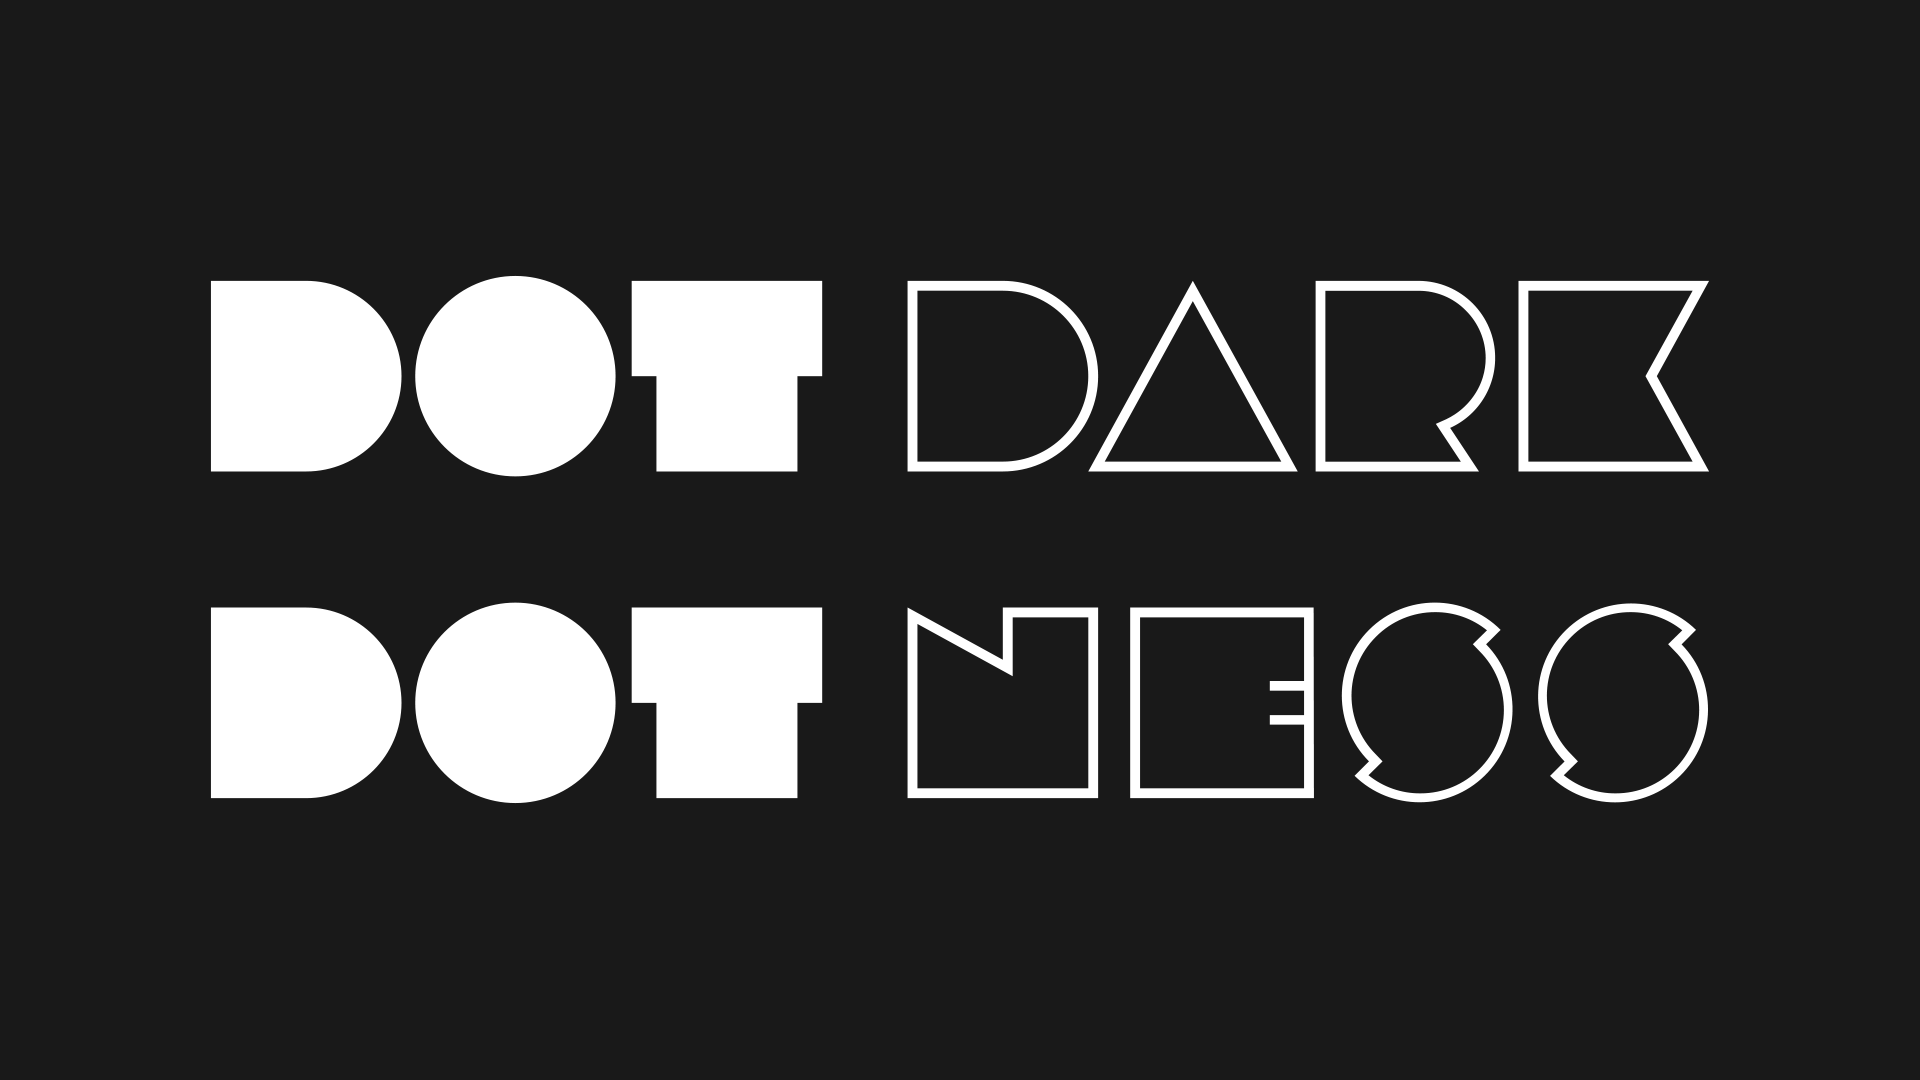 The standard dot.darkness logo